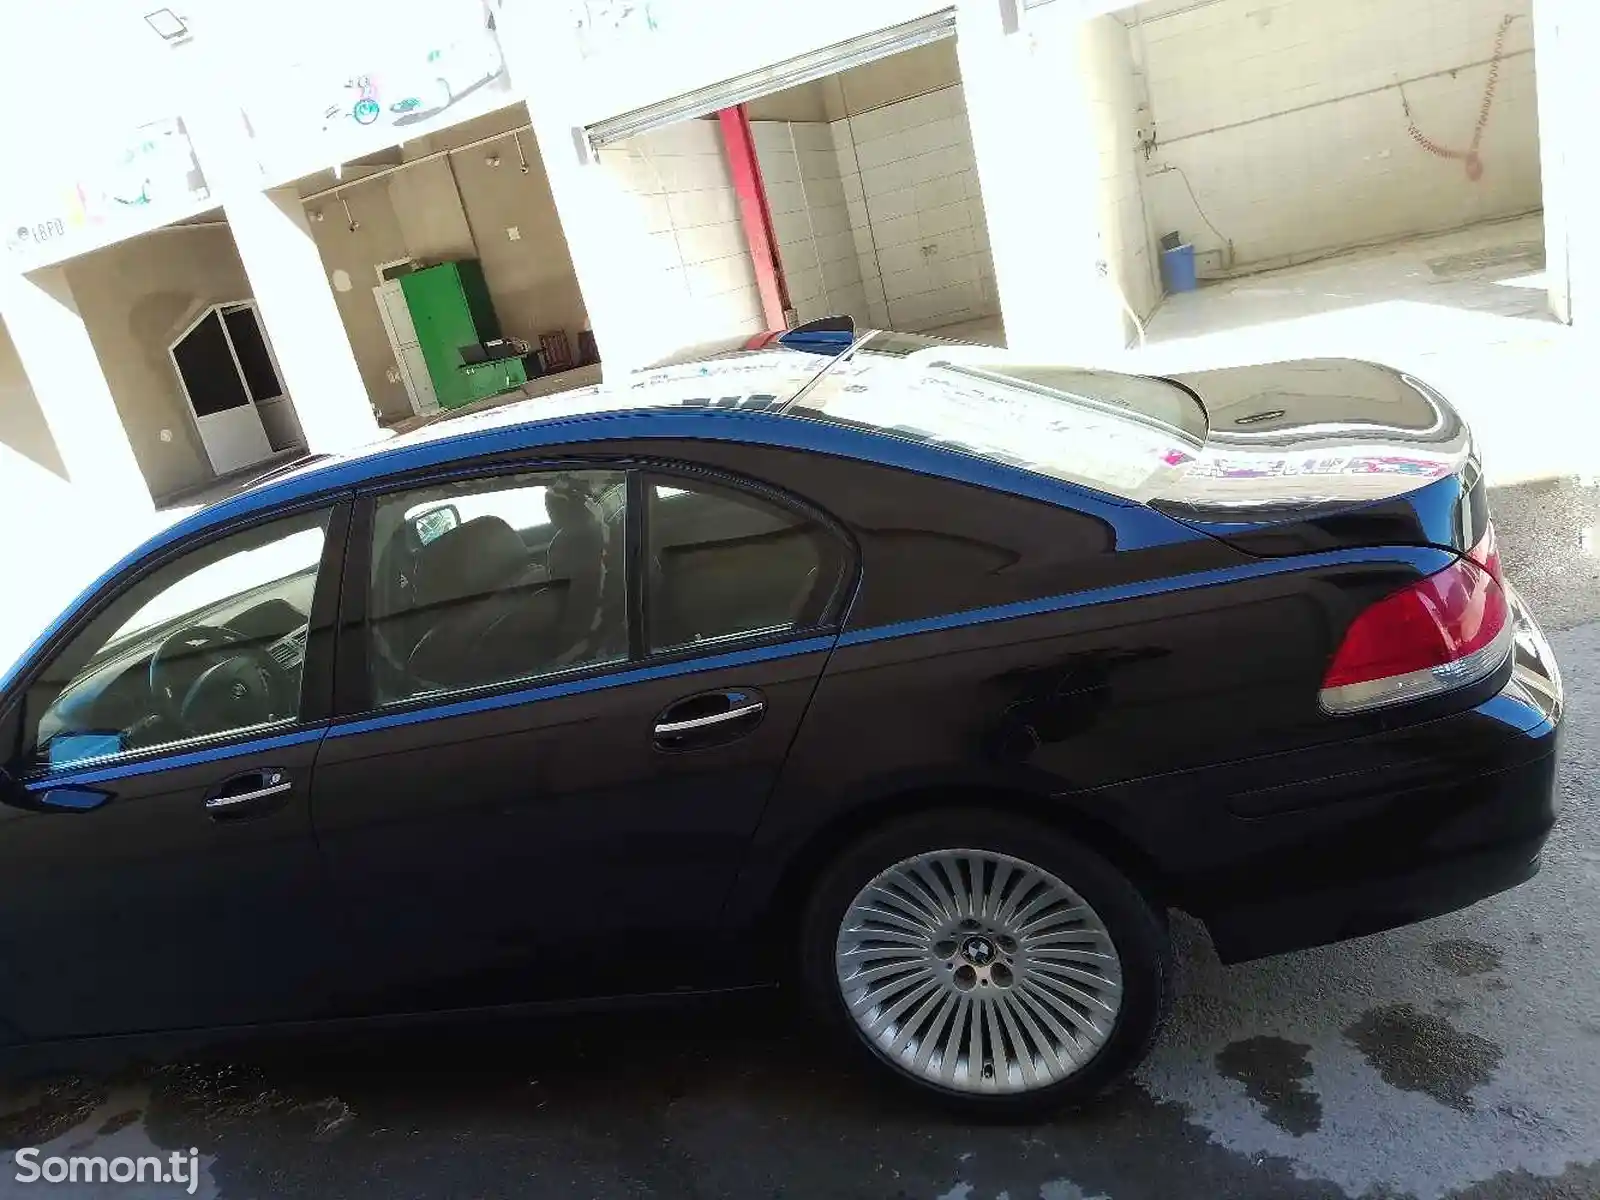 BMW 7 series, 2008-2